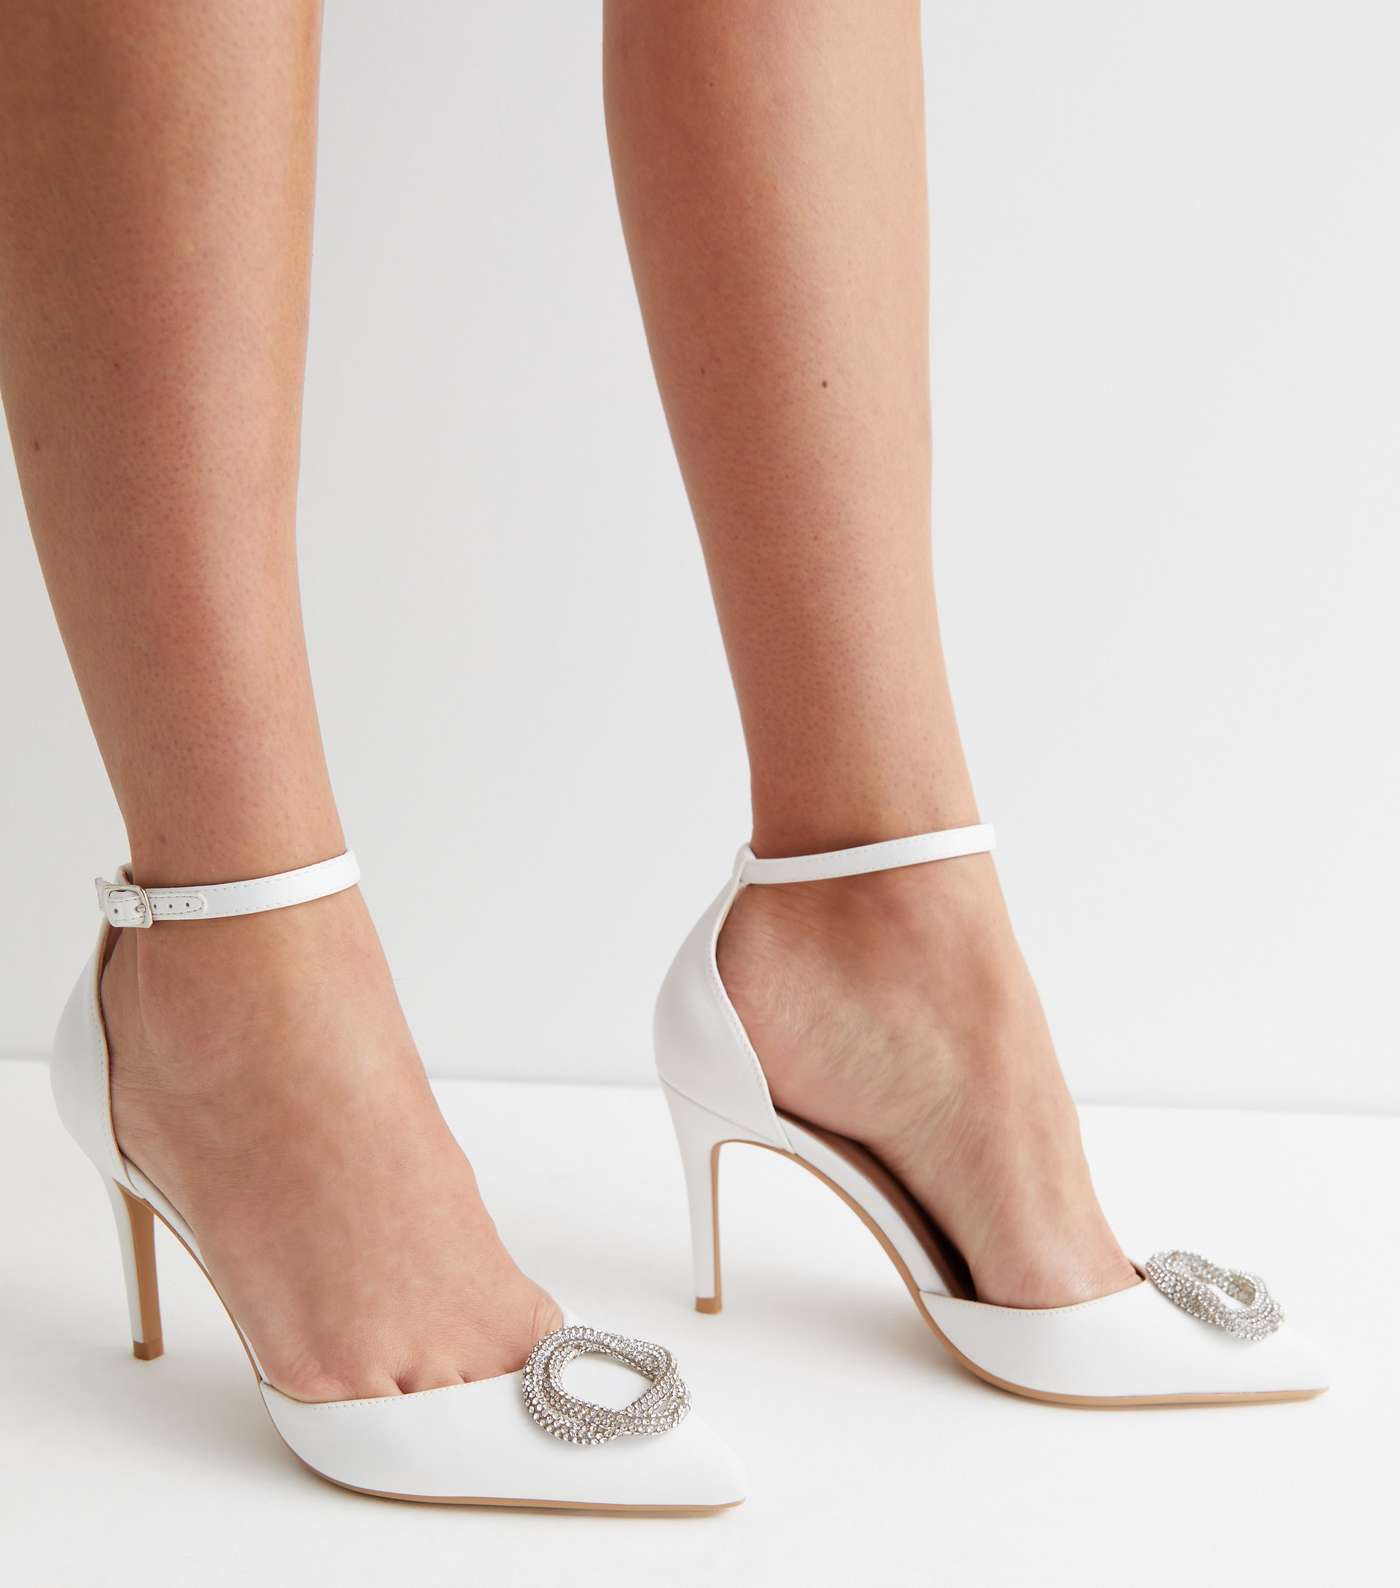 White Satin Embellished Pointed Stiletto Heel Court Shoes Image 2